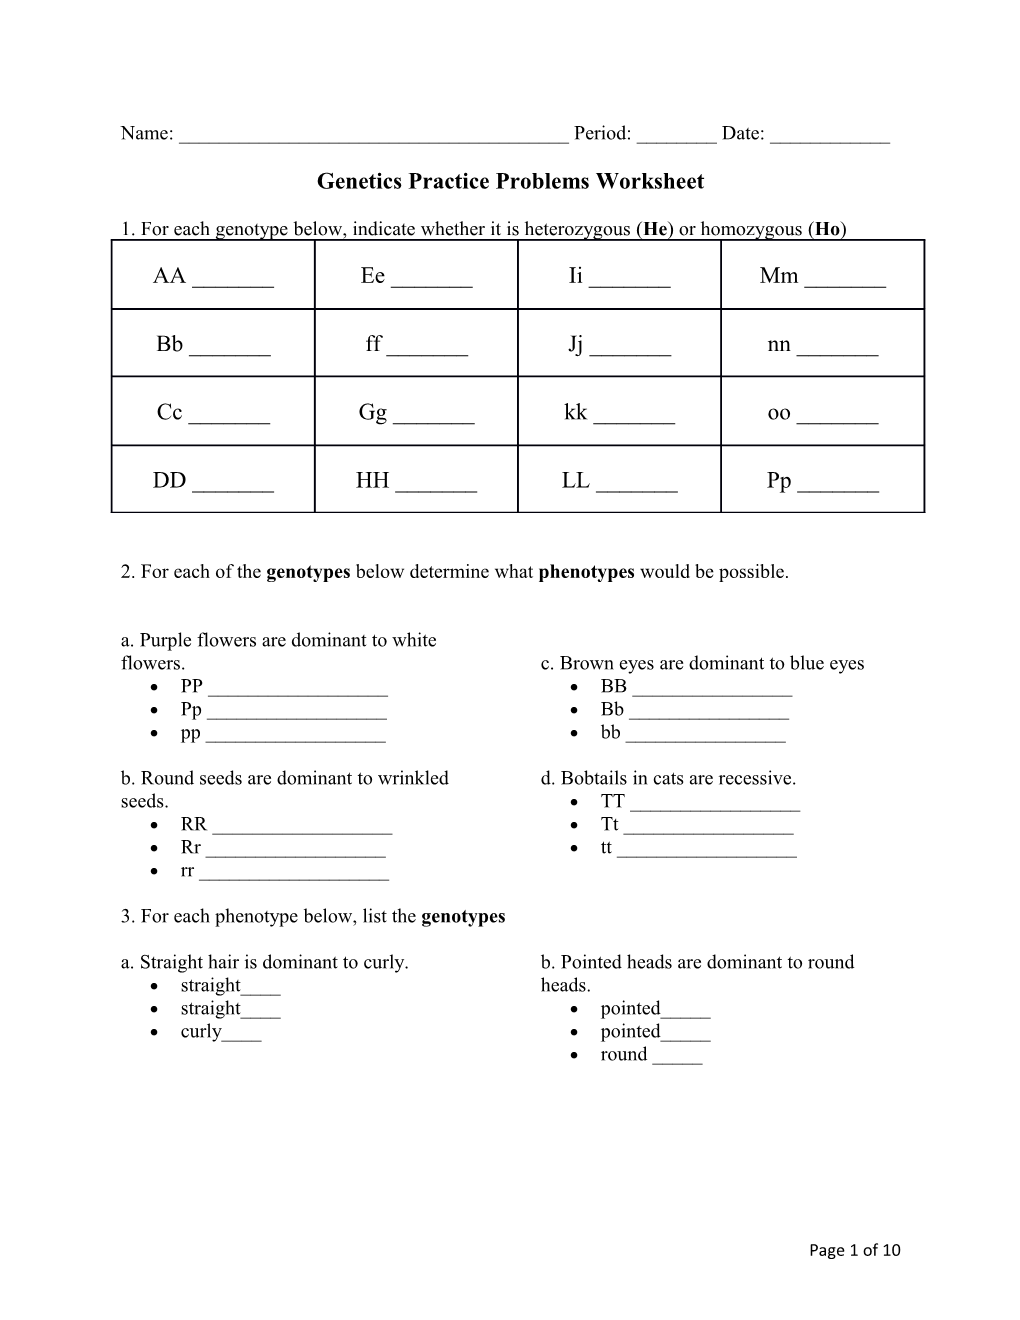 Genetics Practice Problems Worksheet